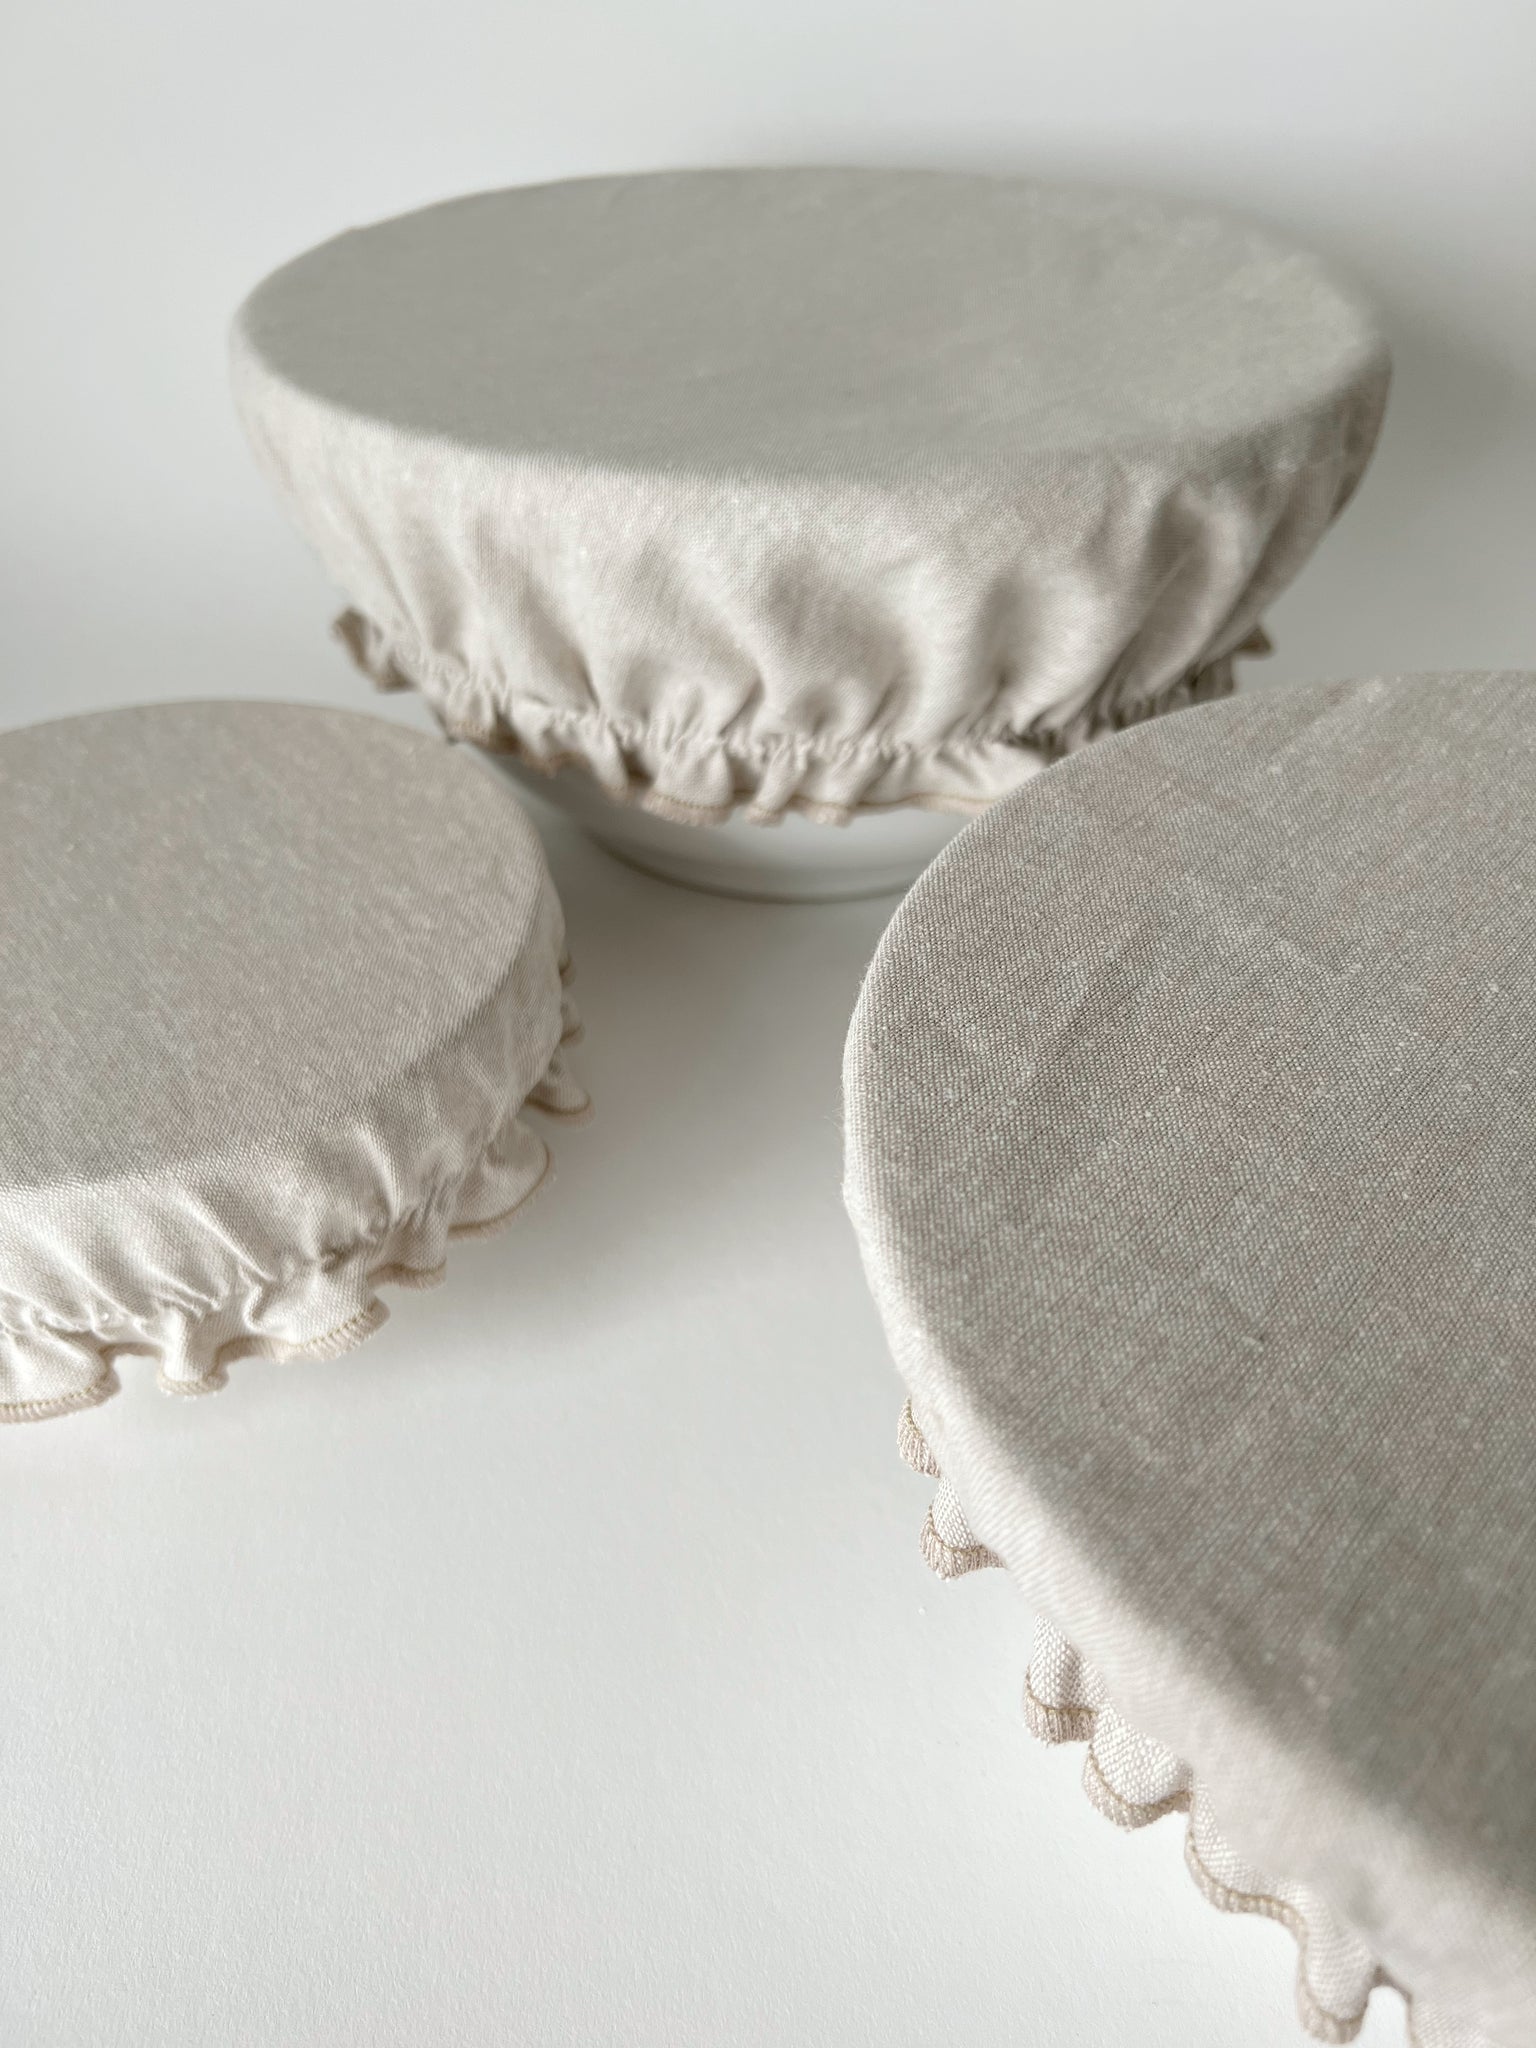 Handmade Reusable Bowl Covers | set of 3